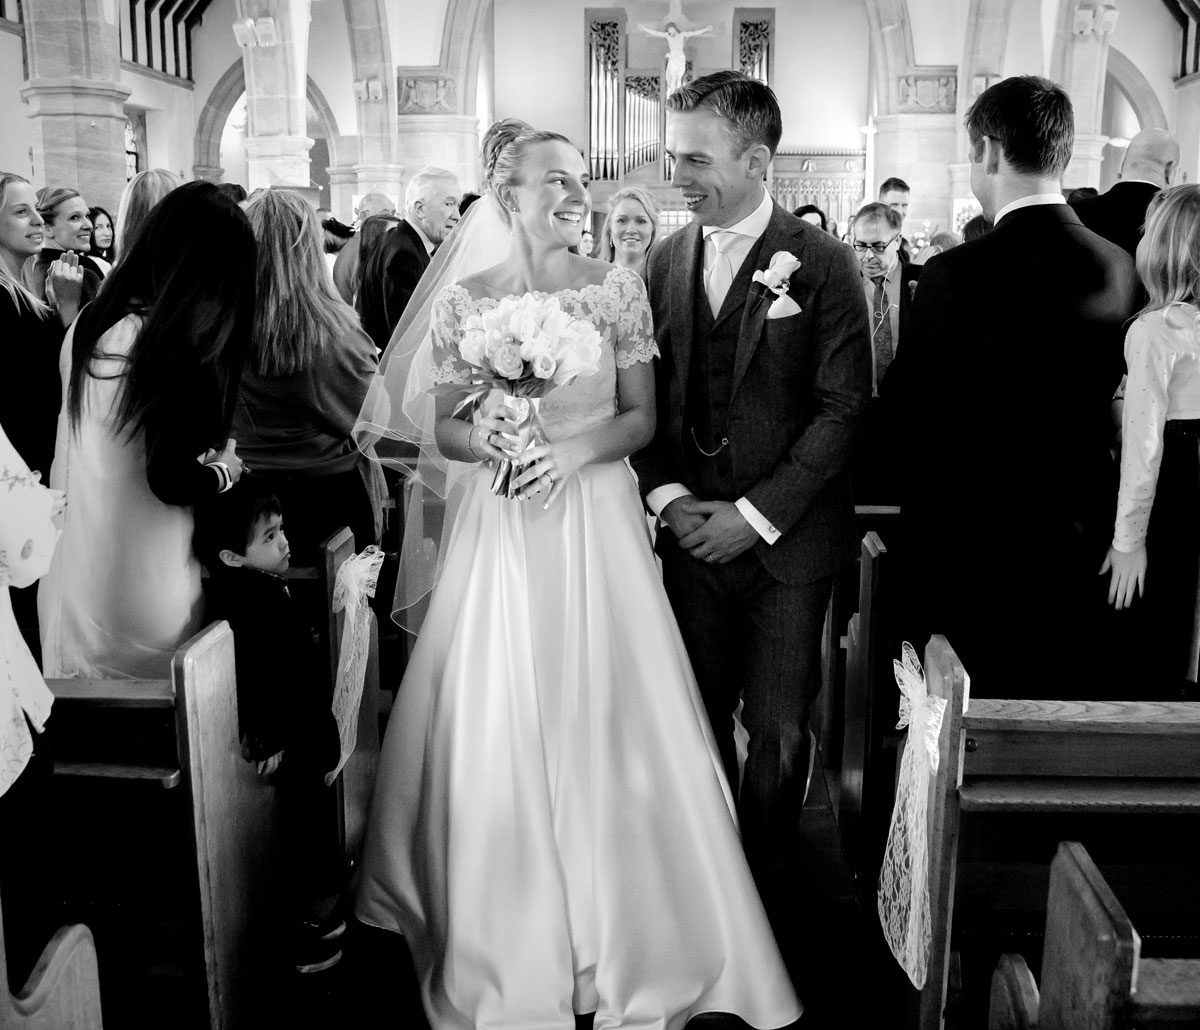 Newly weds walk down church aisle photo